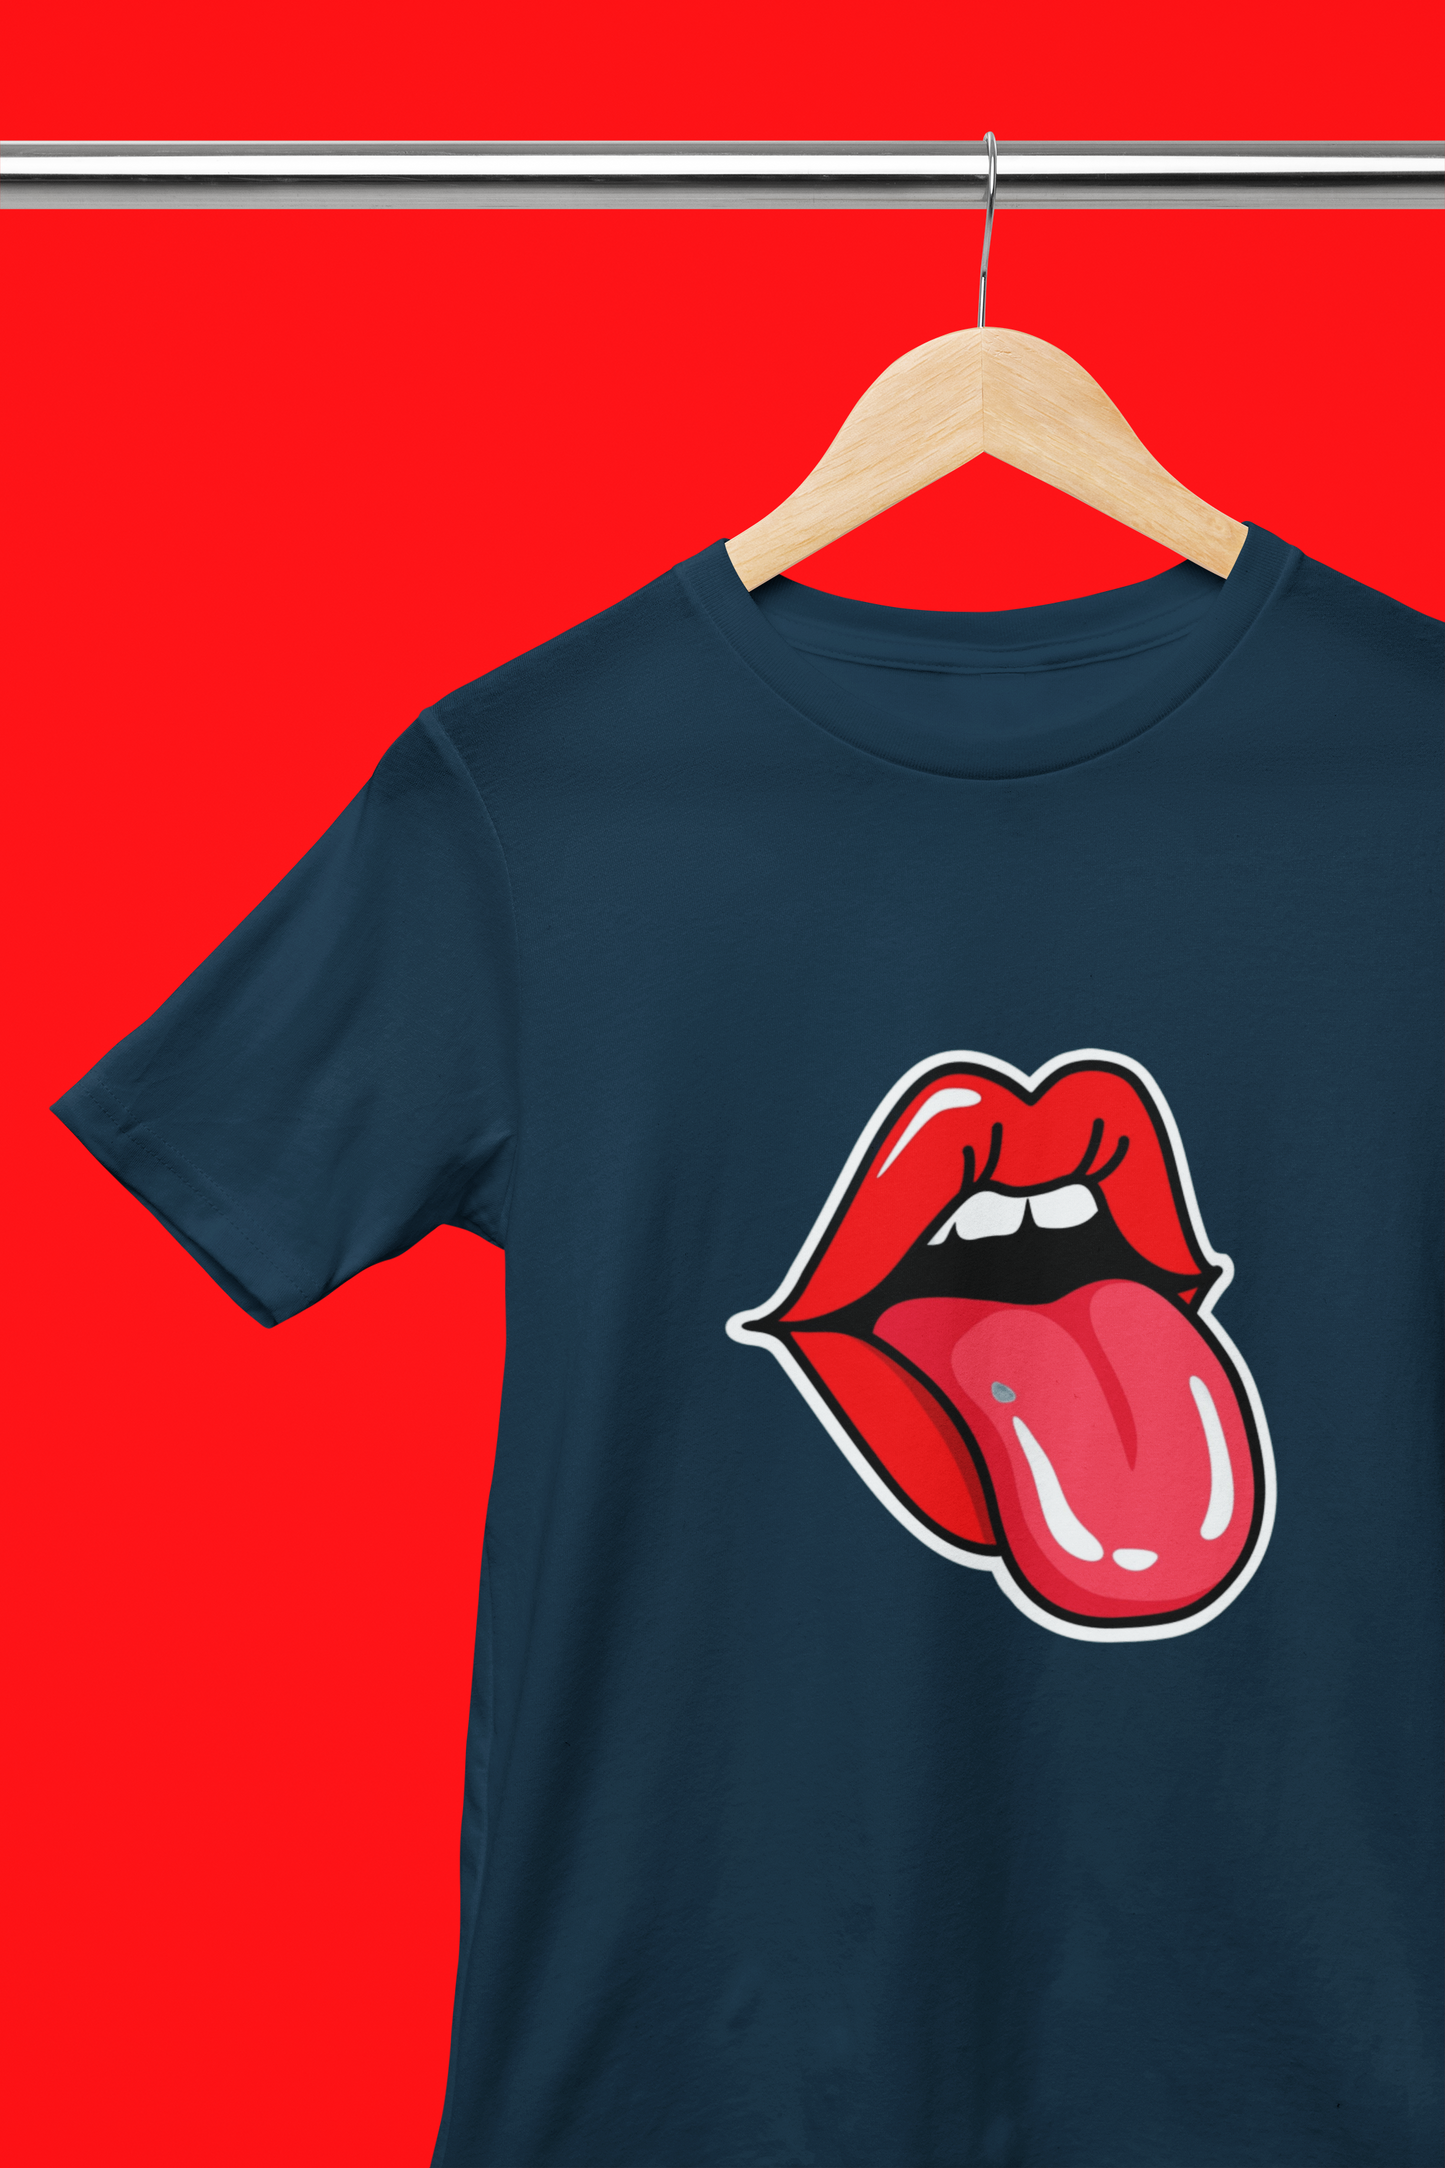 Rolling Stones Lips - Adult Tee